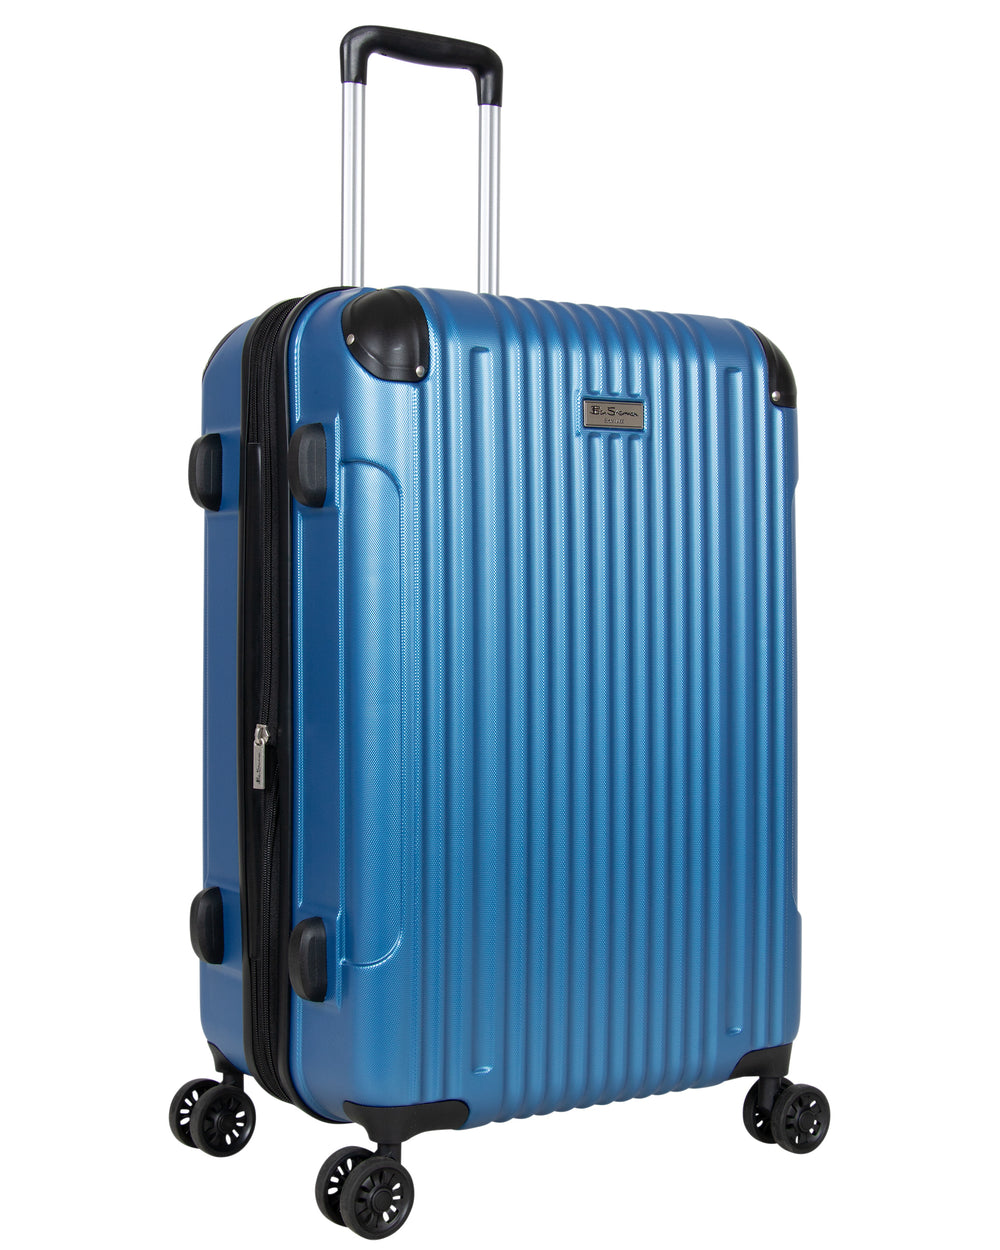 Heathrow Haul 3-Piece Lightweight Expandable Luggage Set - Vivid Blue